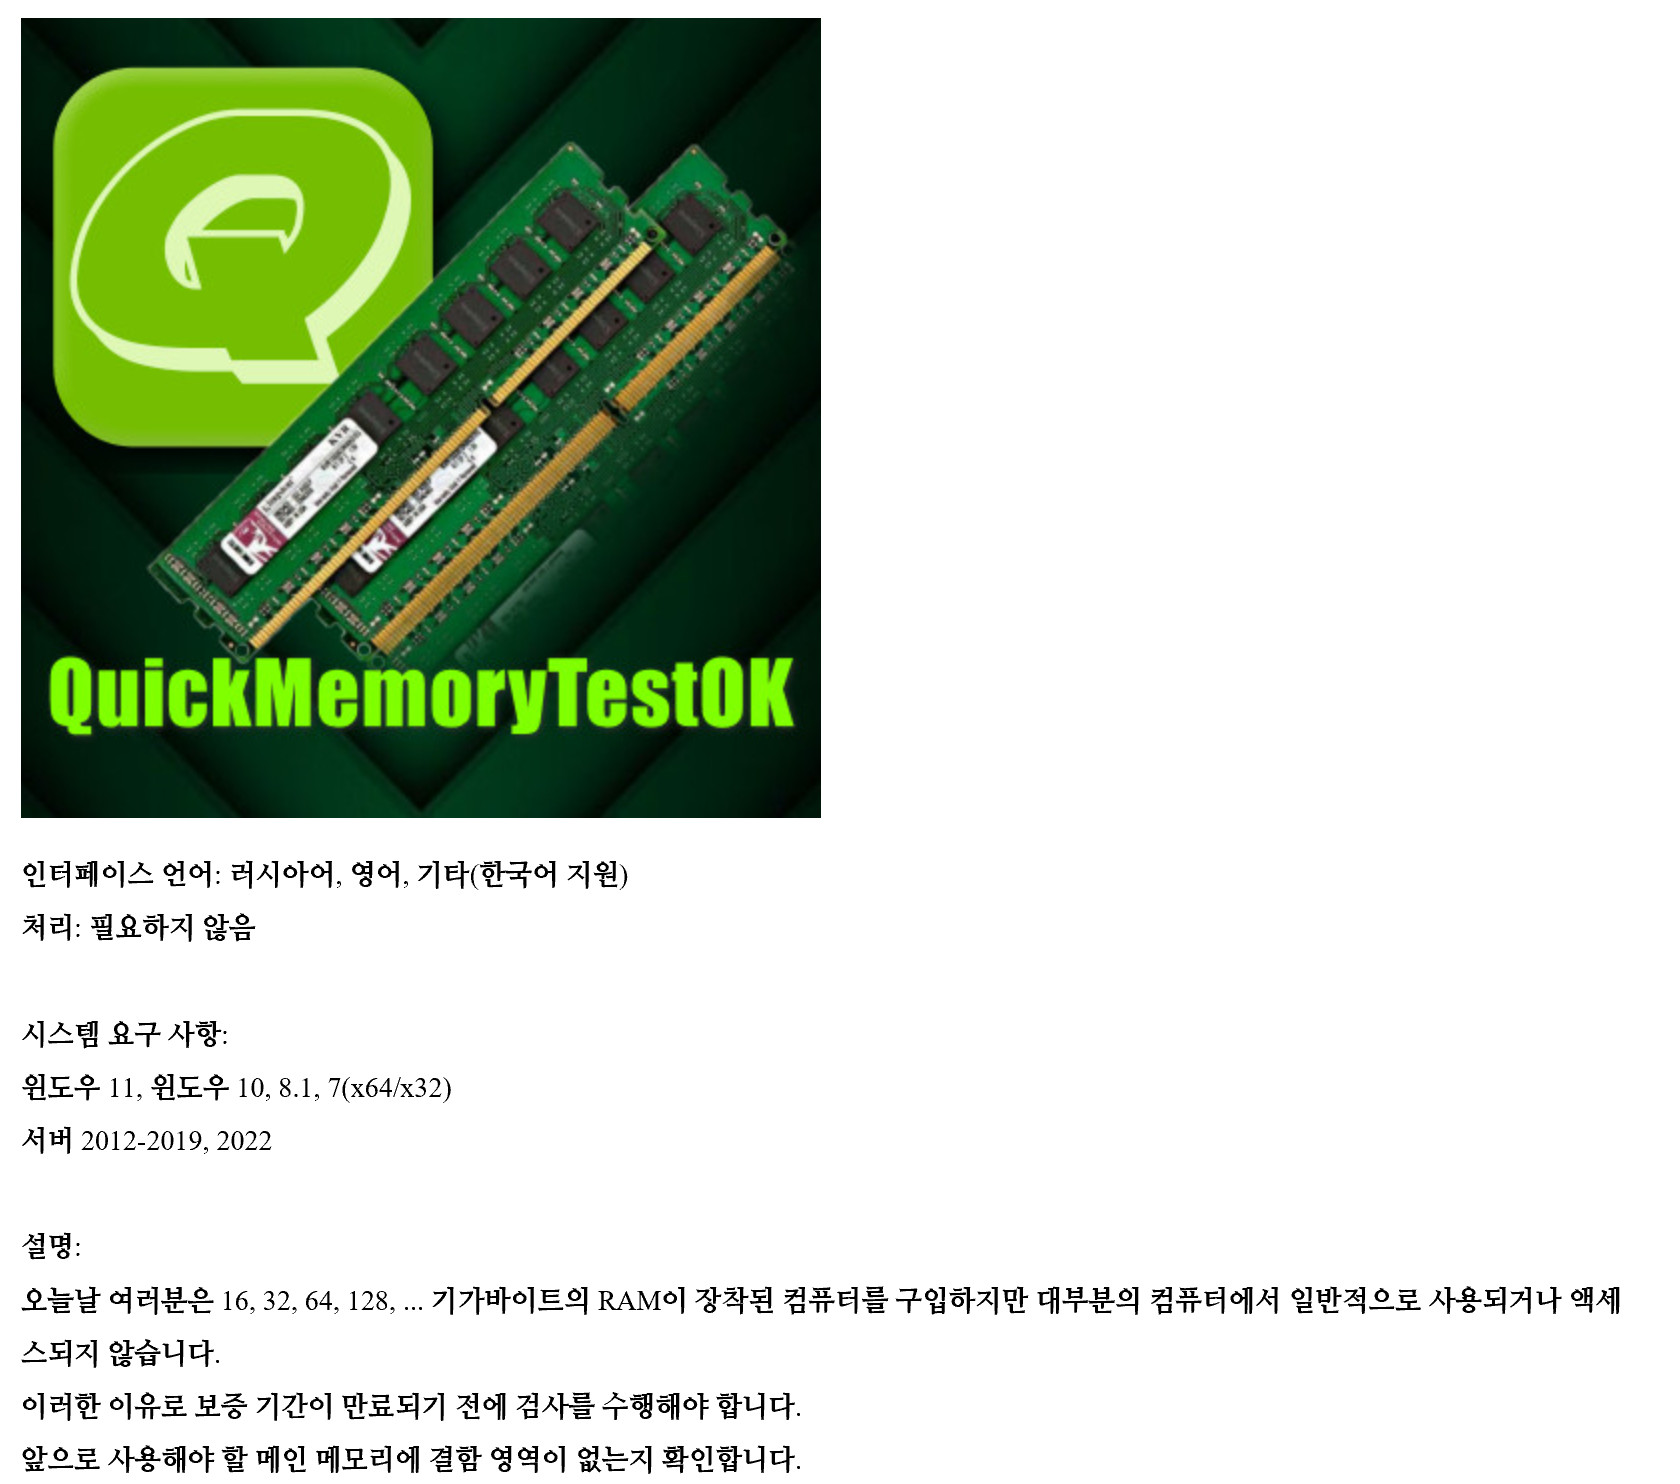 QuickMemoryTestOK 4.67 download the last version for apple